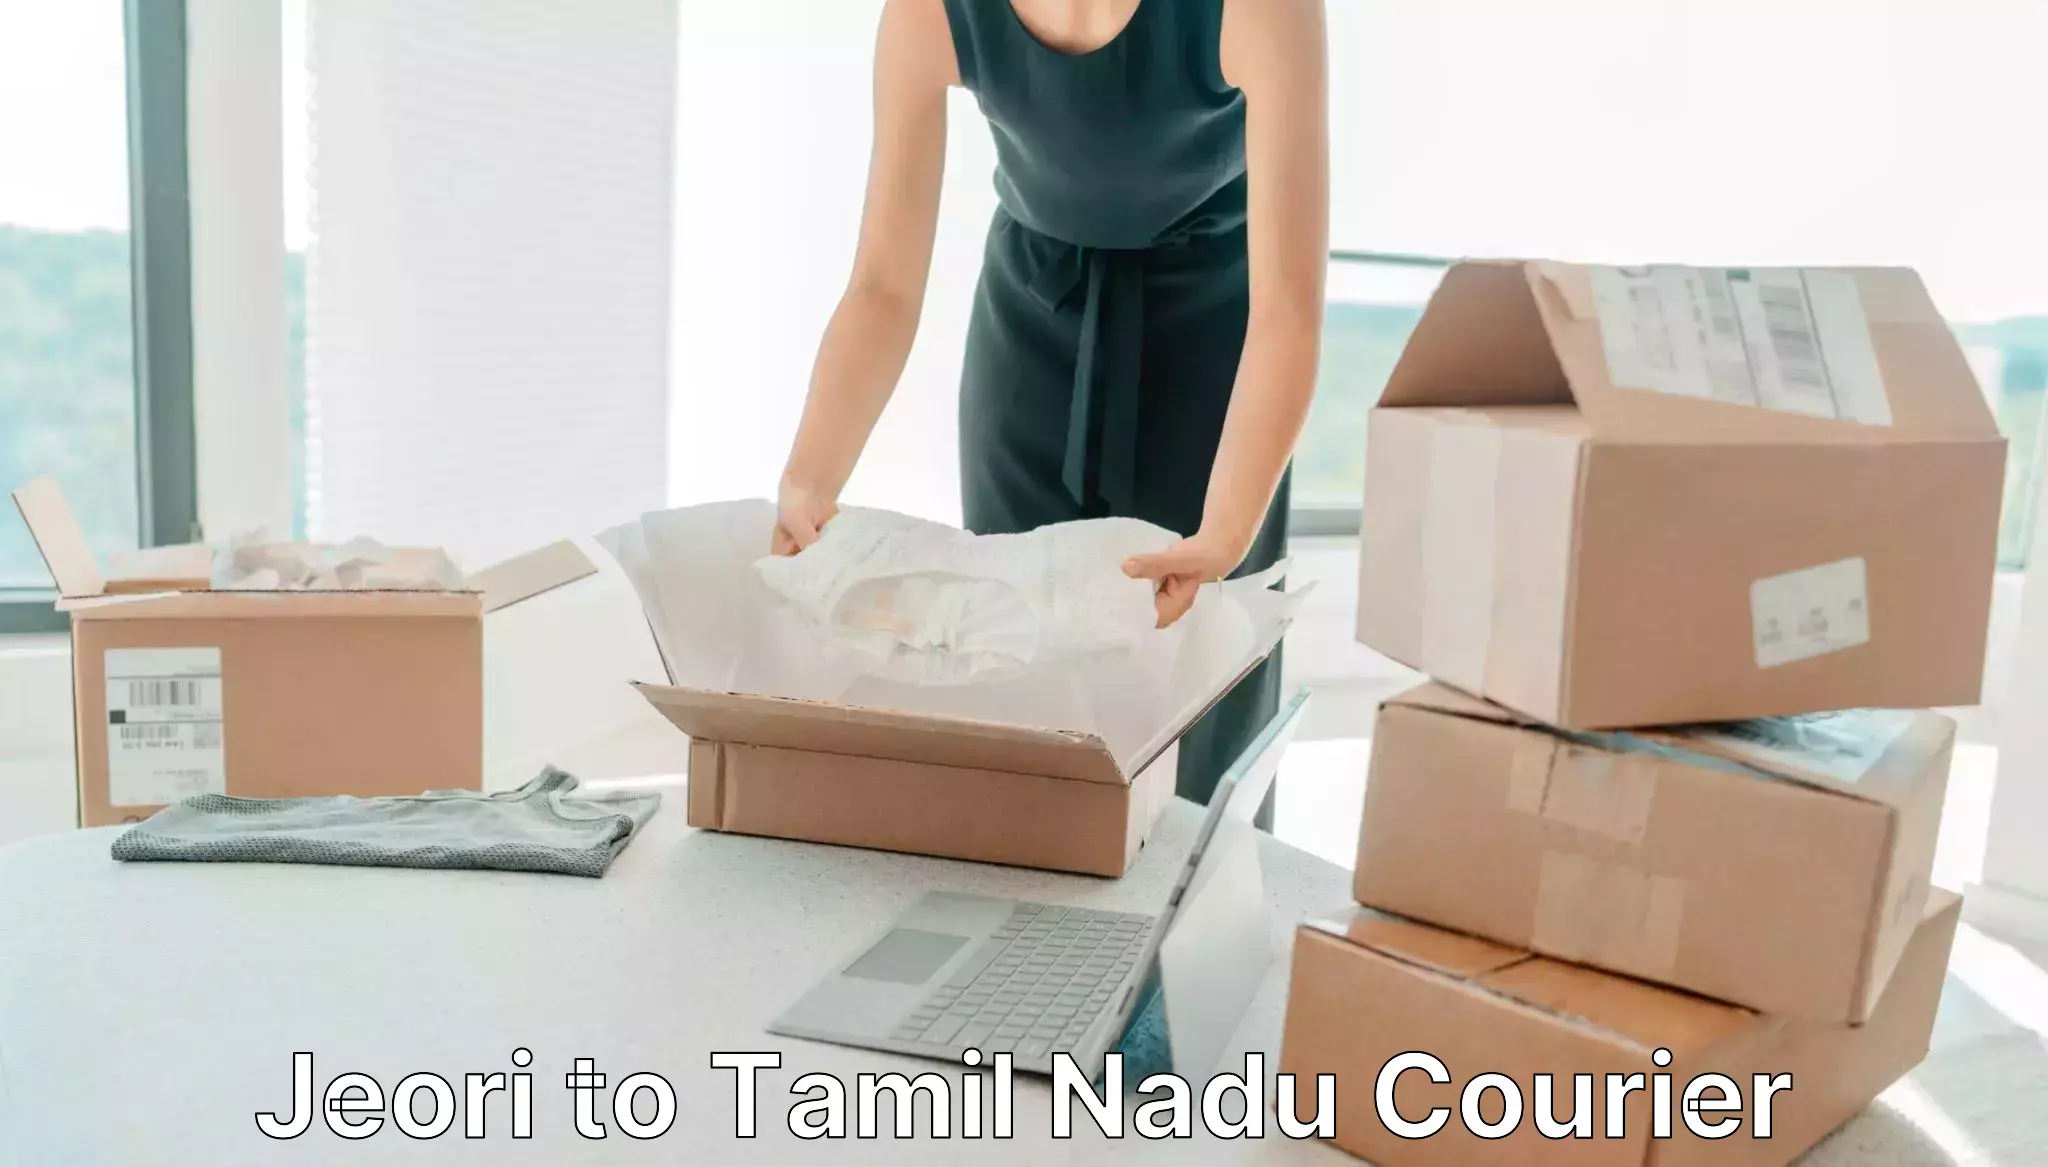 Nationwide parcel services Jeori to Tamil Nadu